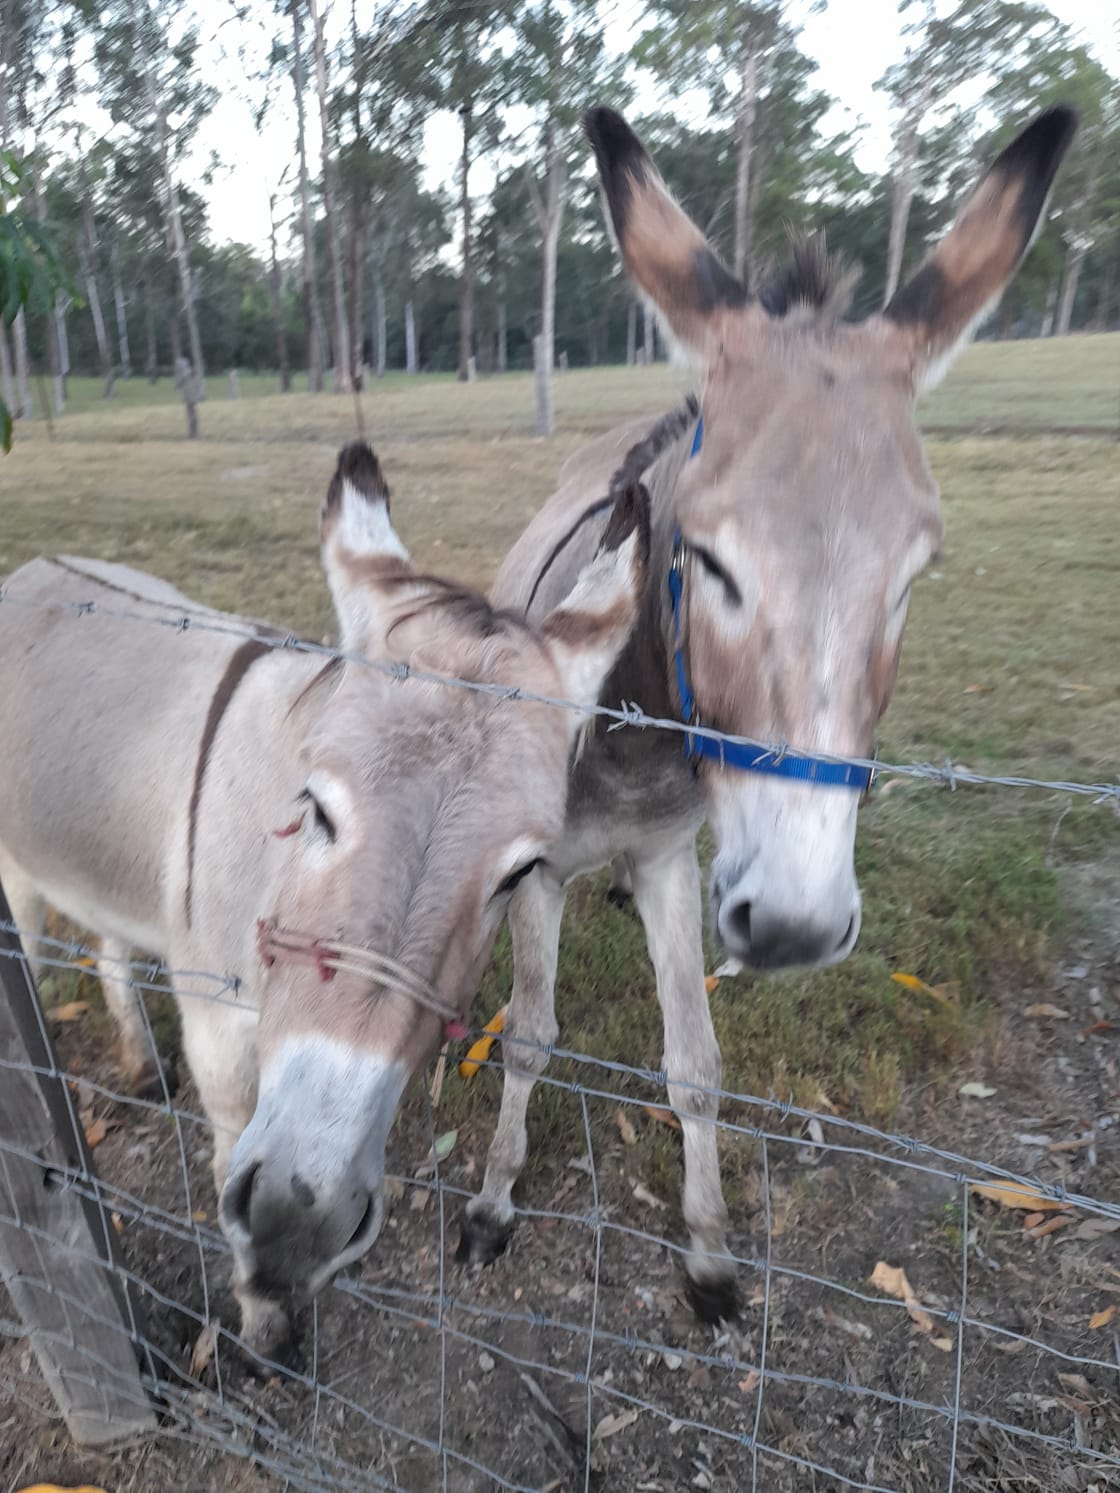 Meet the noisey donkeys Jacks and Queenie
